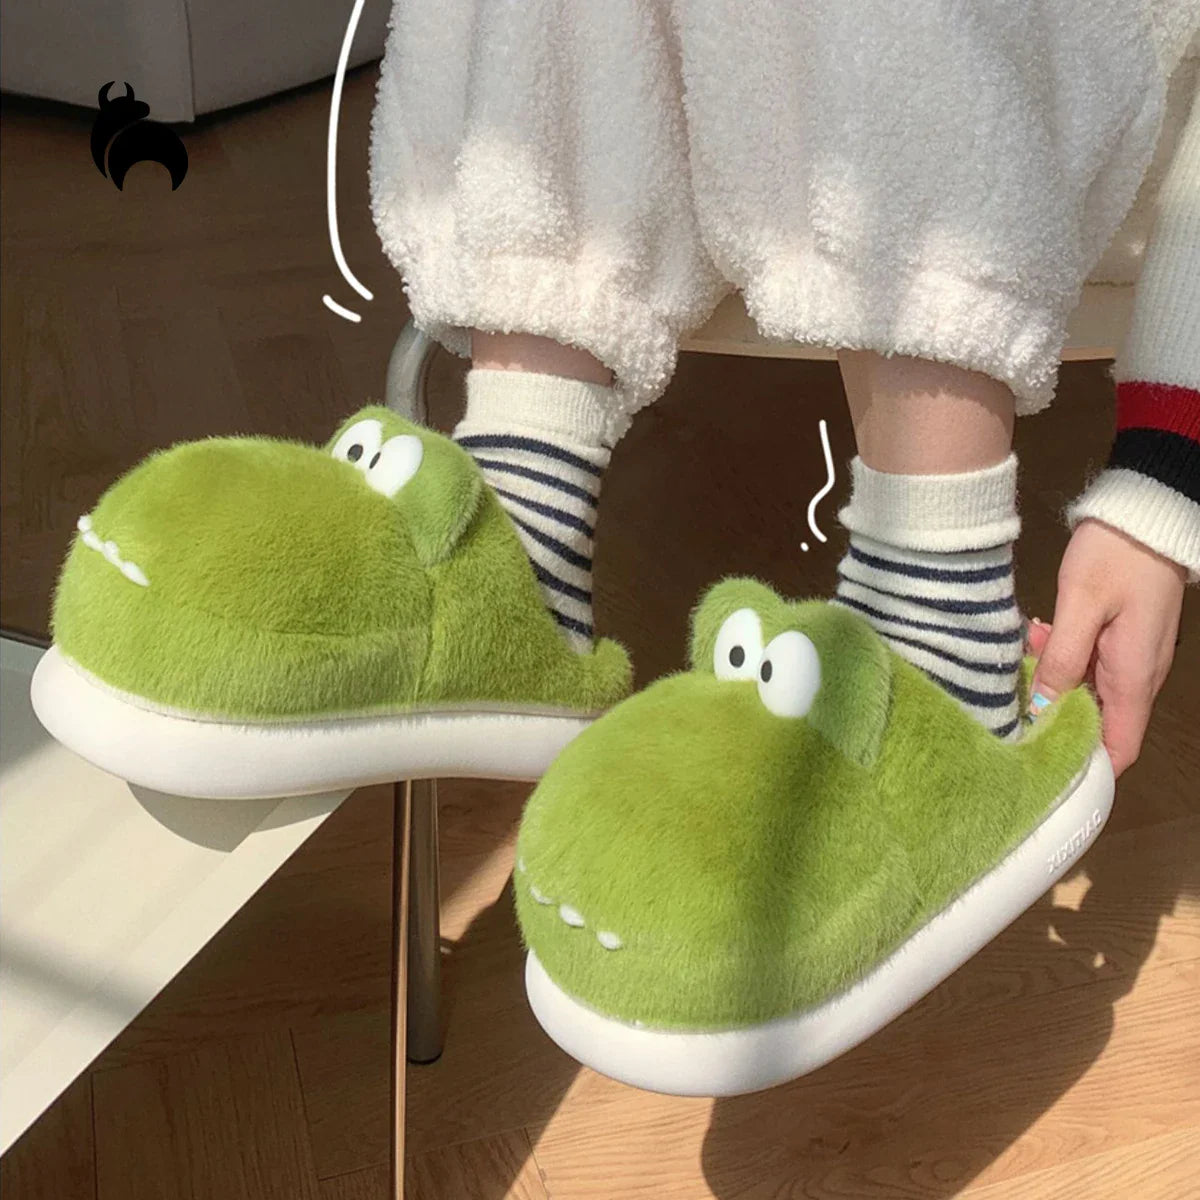 Canmol Crocodile Cotton Slippers - Cozy, Cute, and Anti-skid Warm Plush Comfort